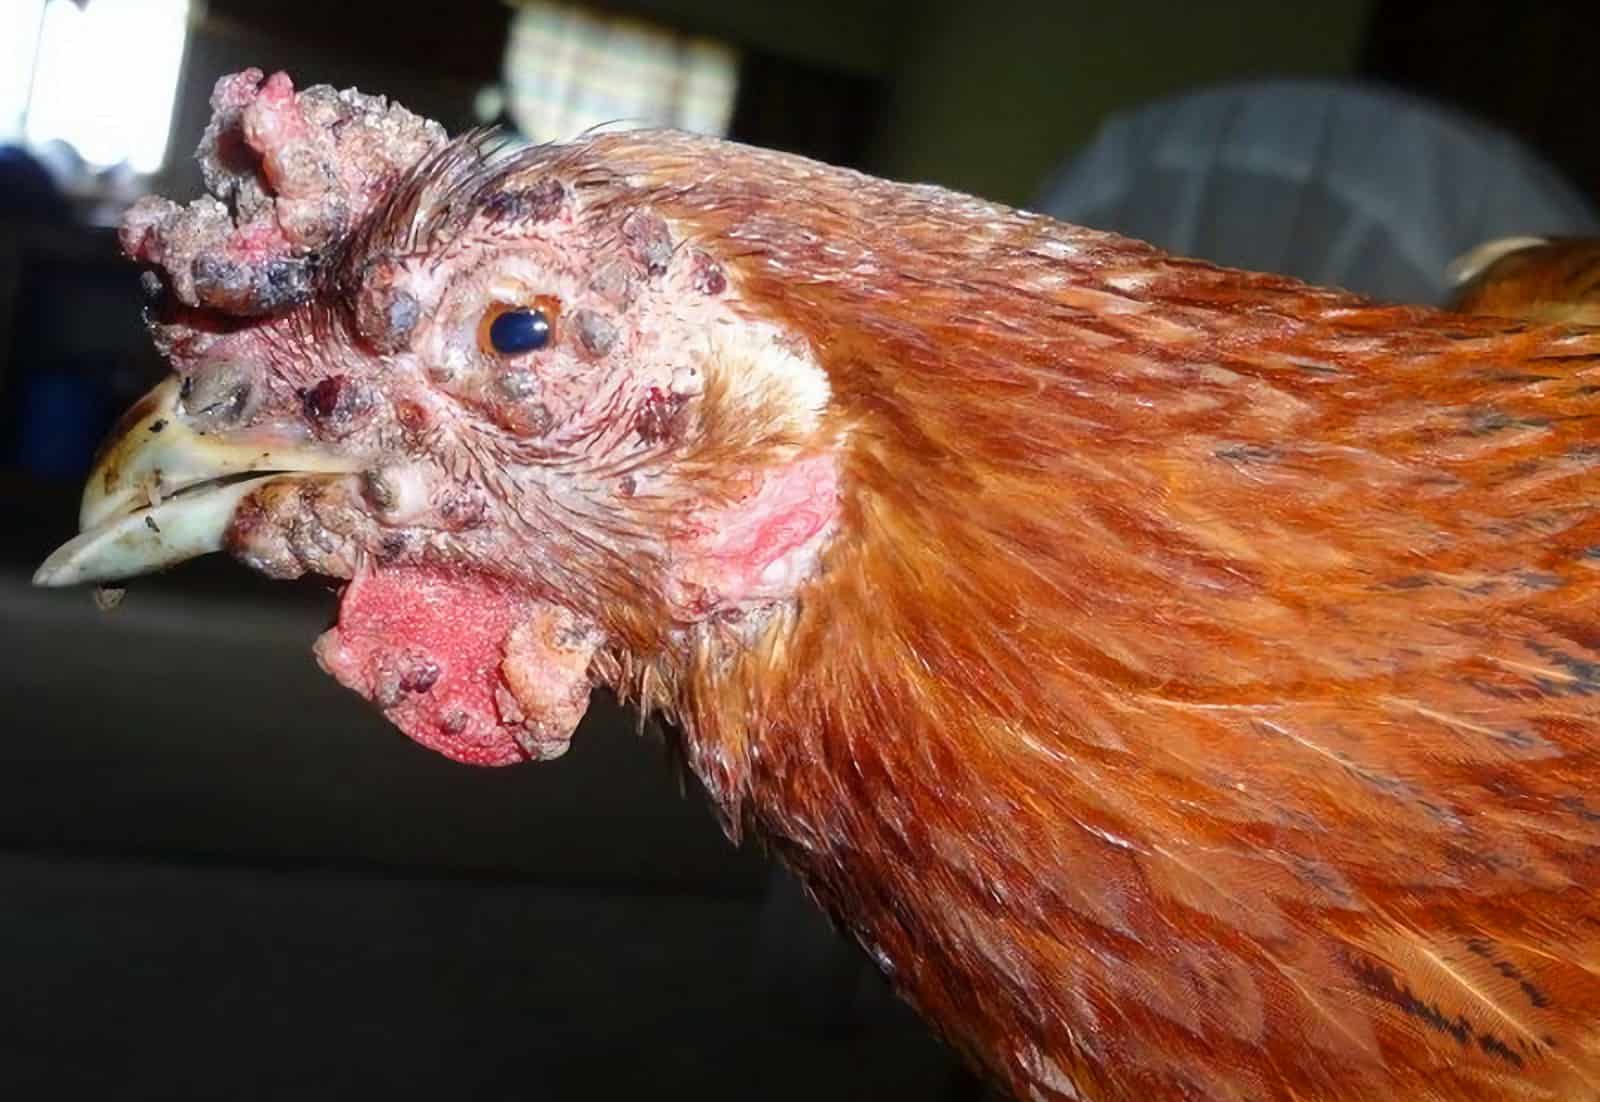 avian pox in chickens